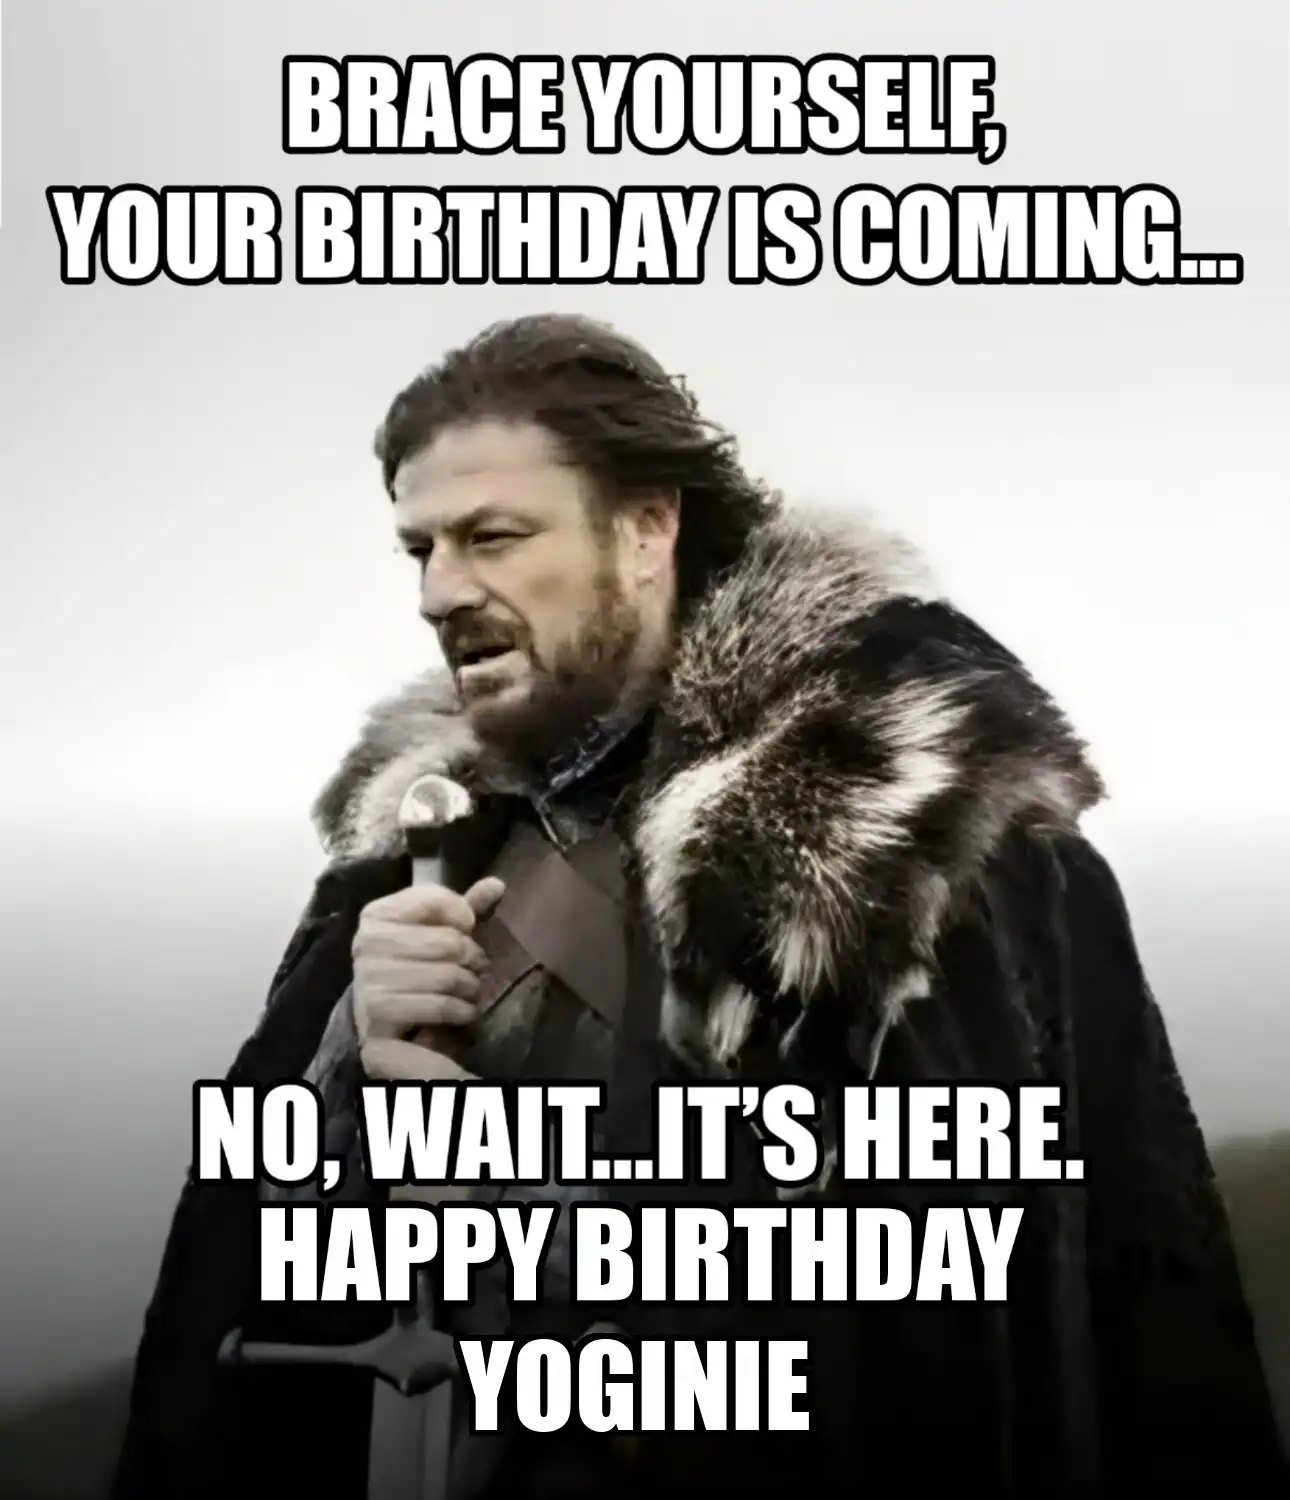 Happy Birthday Yoginie Brace Yourself Your Birthday Is Coming Meme